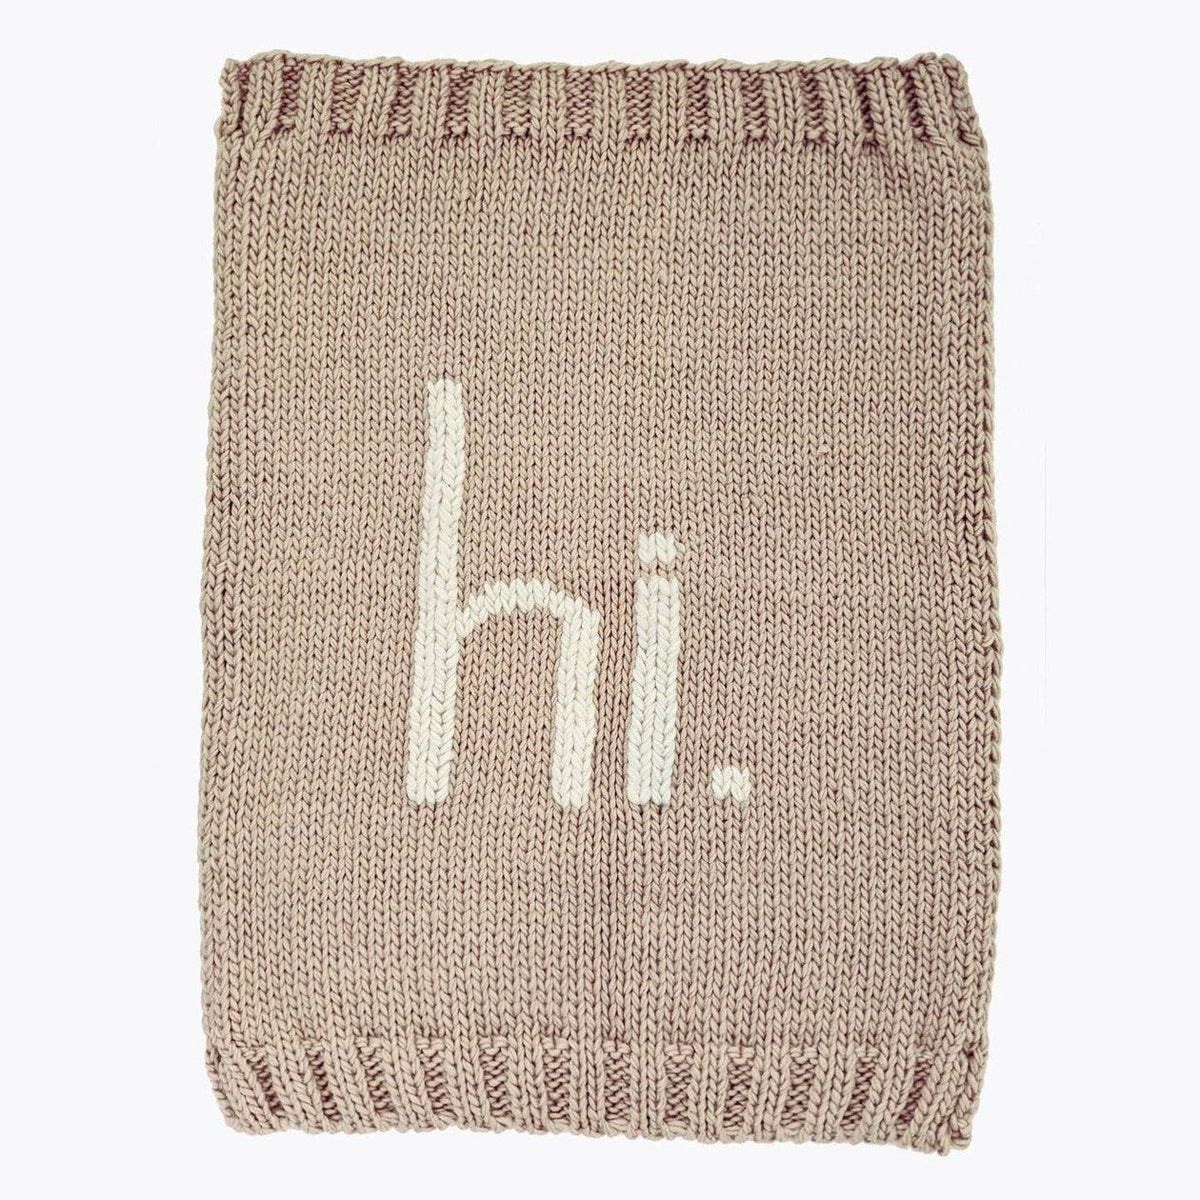 Pebble Hi Hand Knit Baby Blanket